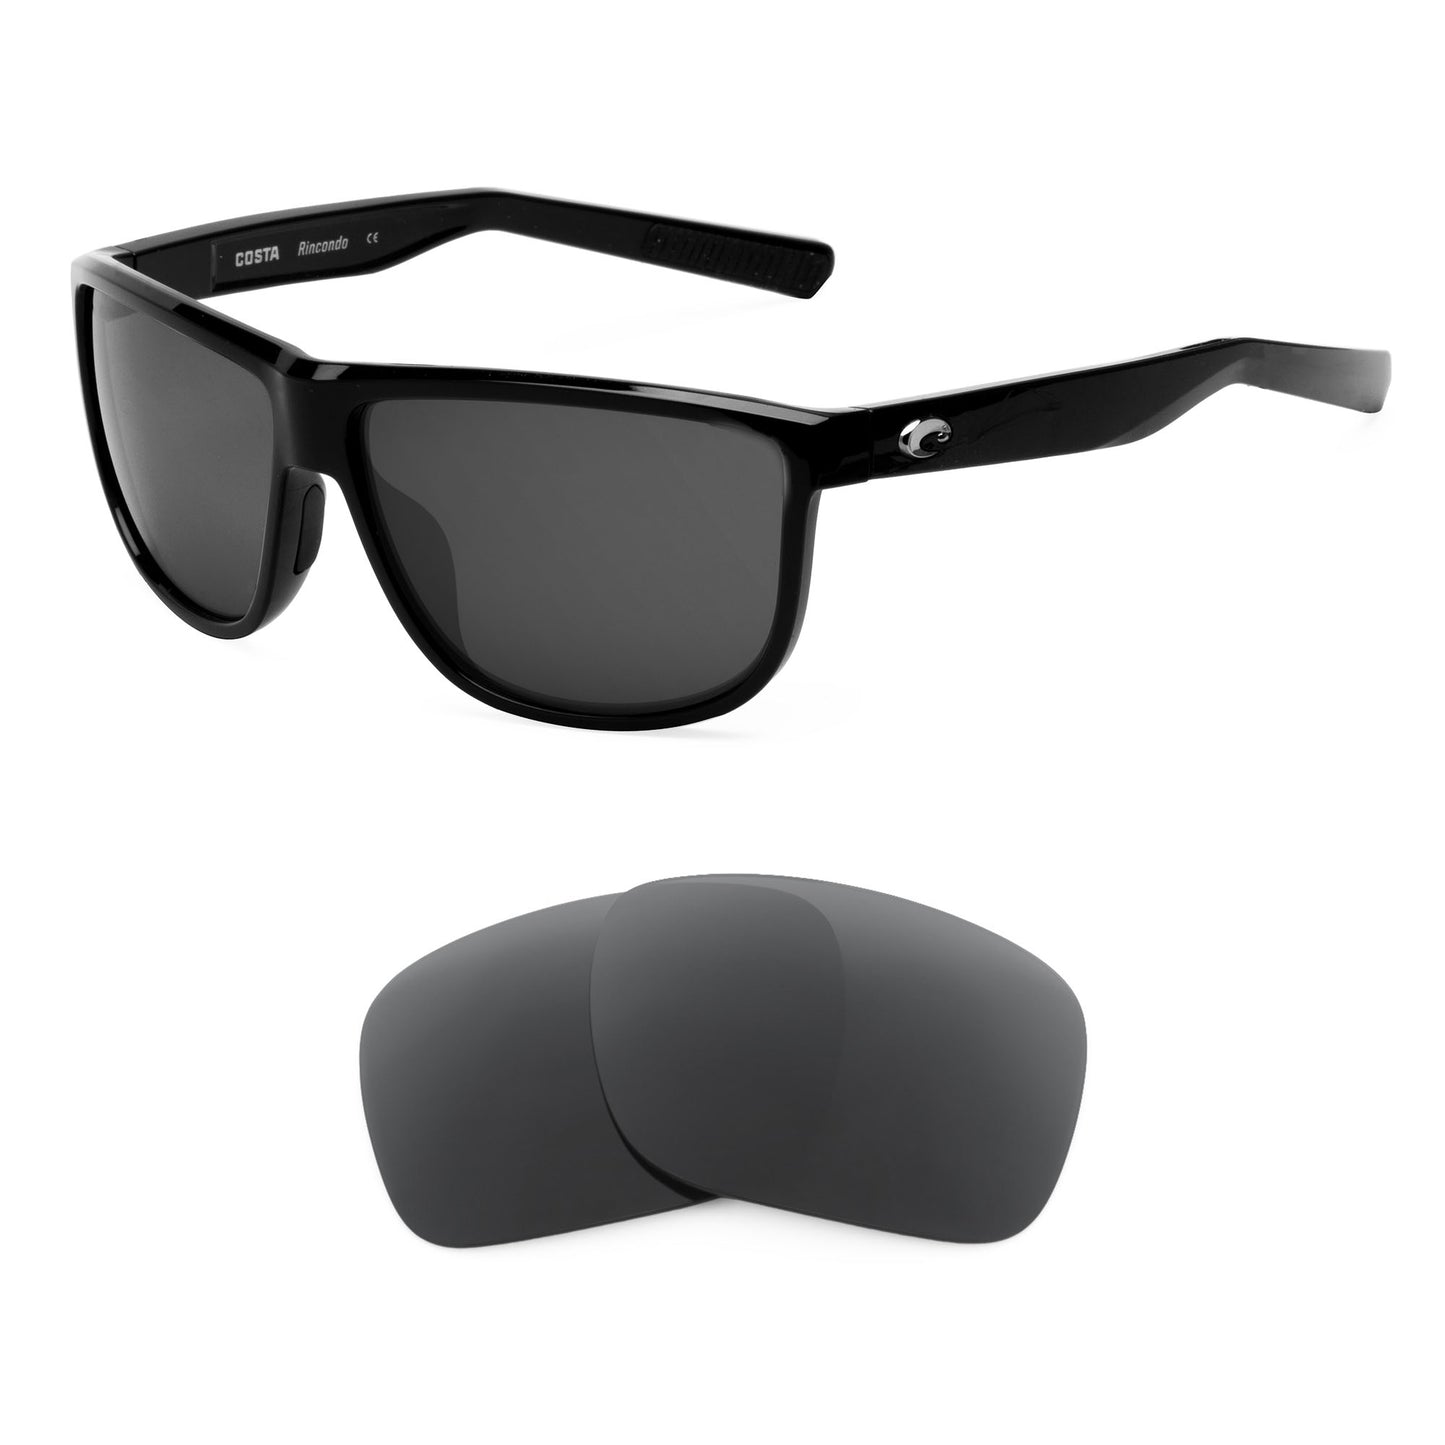 Costa Rincondo sunglasses with replacement lenses